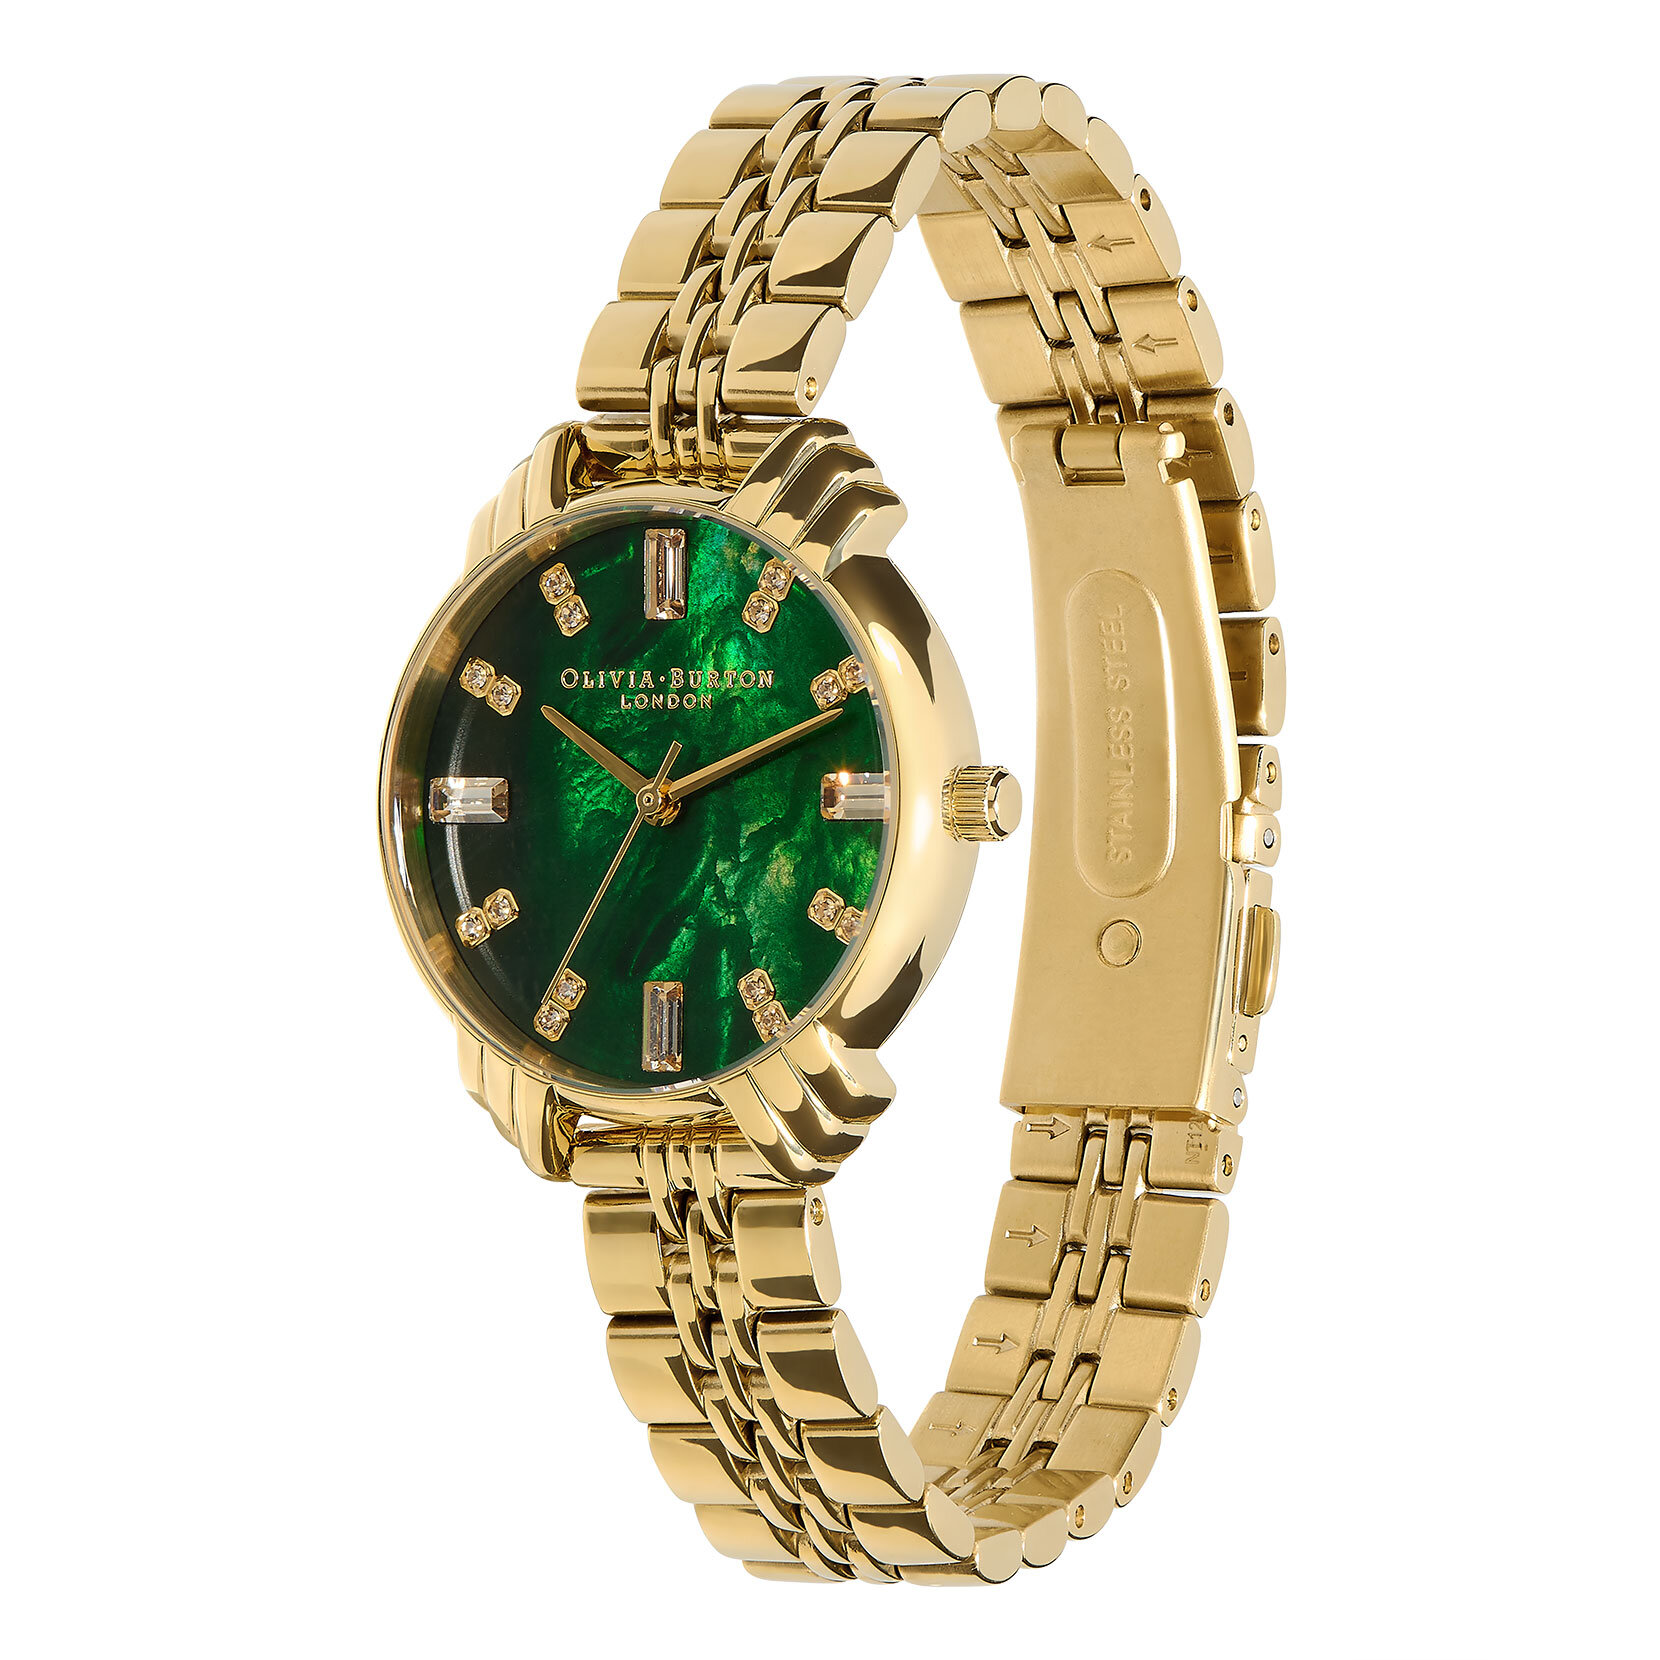 30mm Emerald & Gold Bracelet Watch